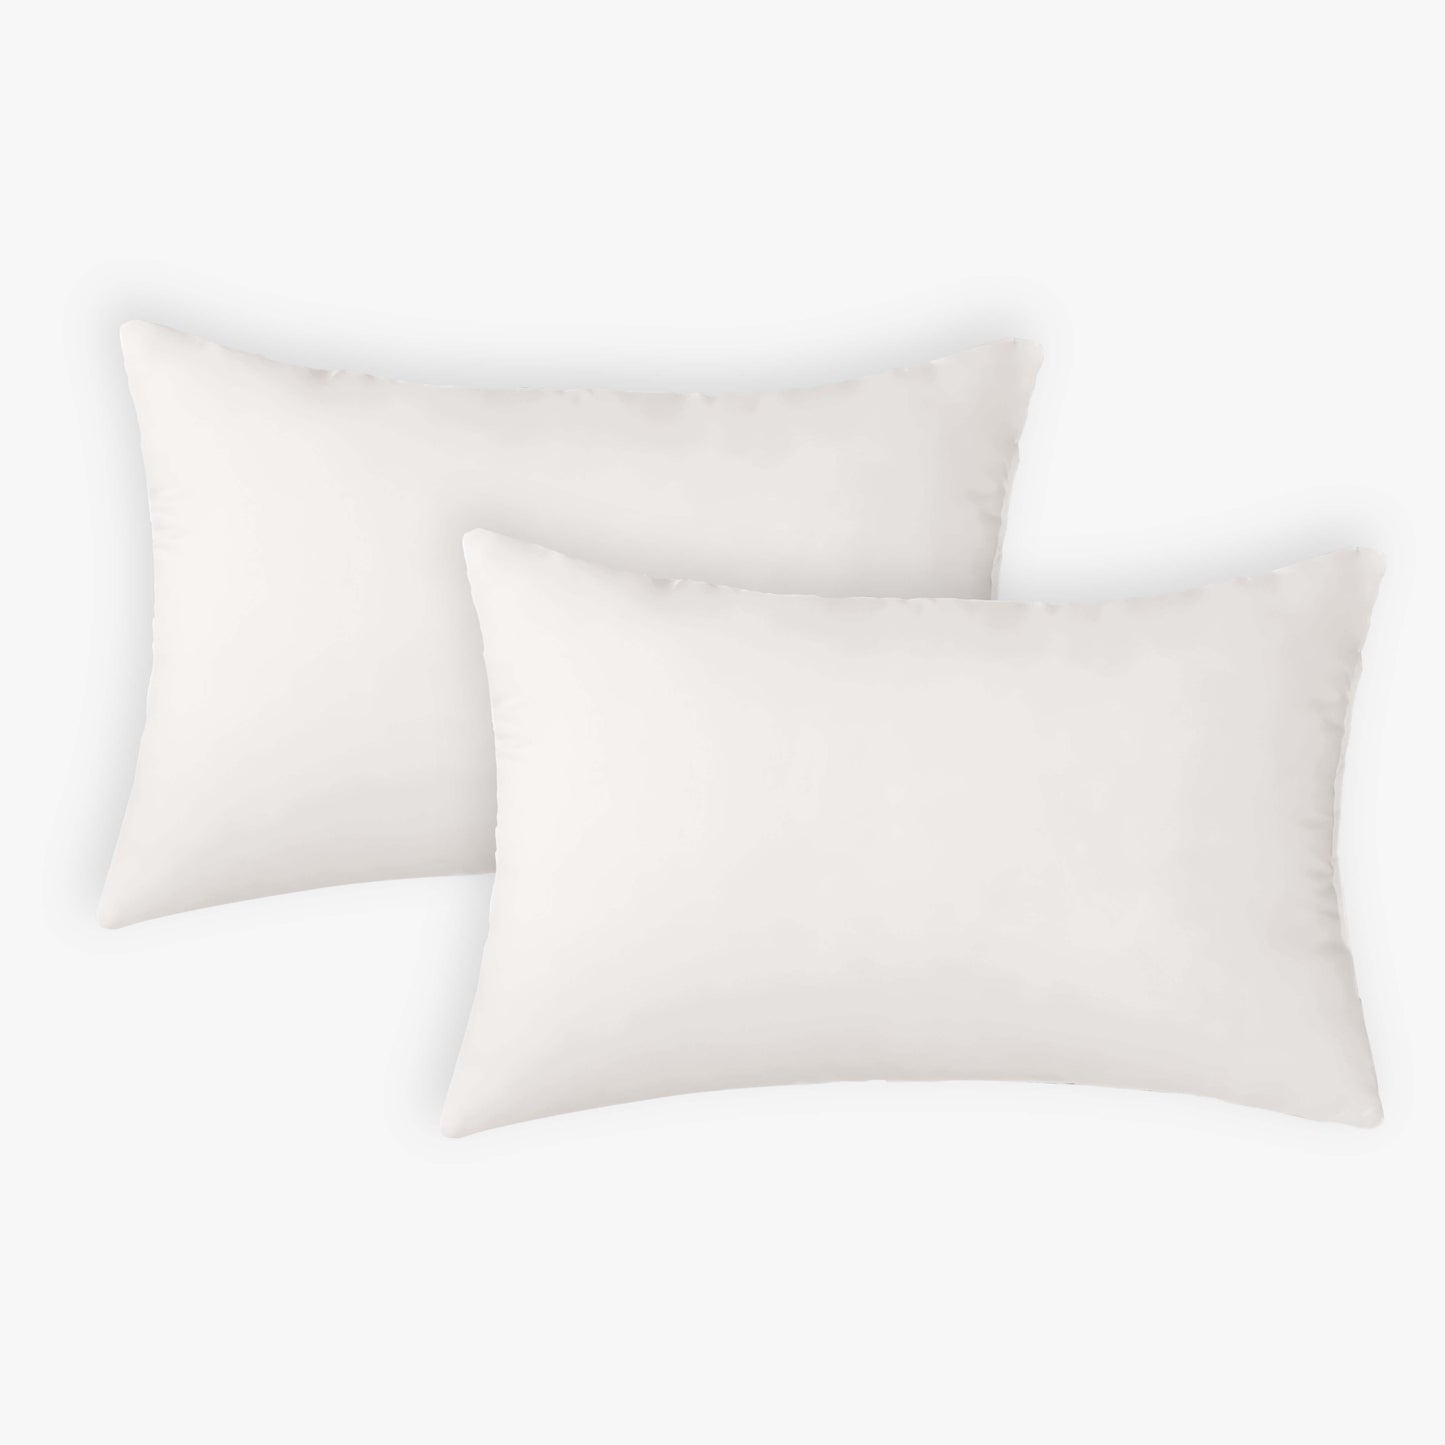 Cushion Insert (Filler) - Super Soft Microfiber